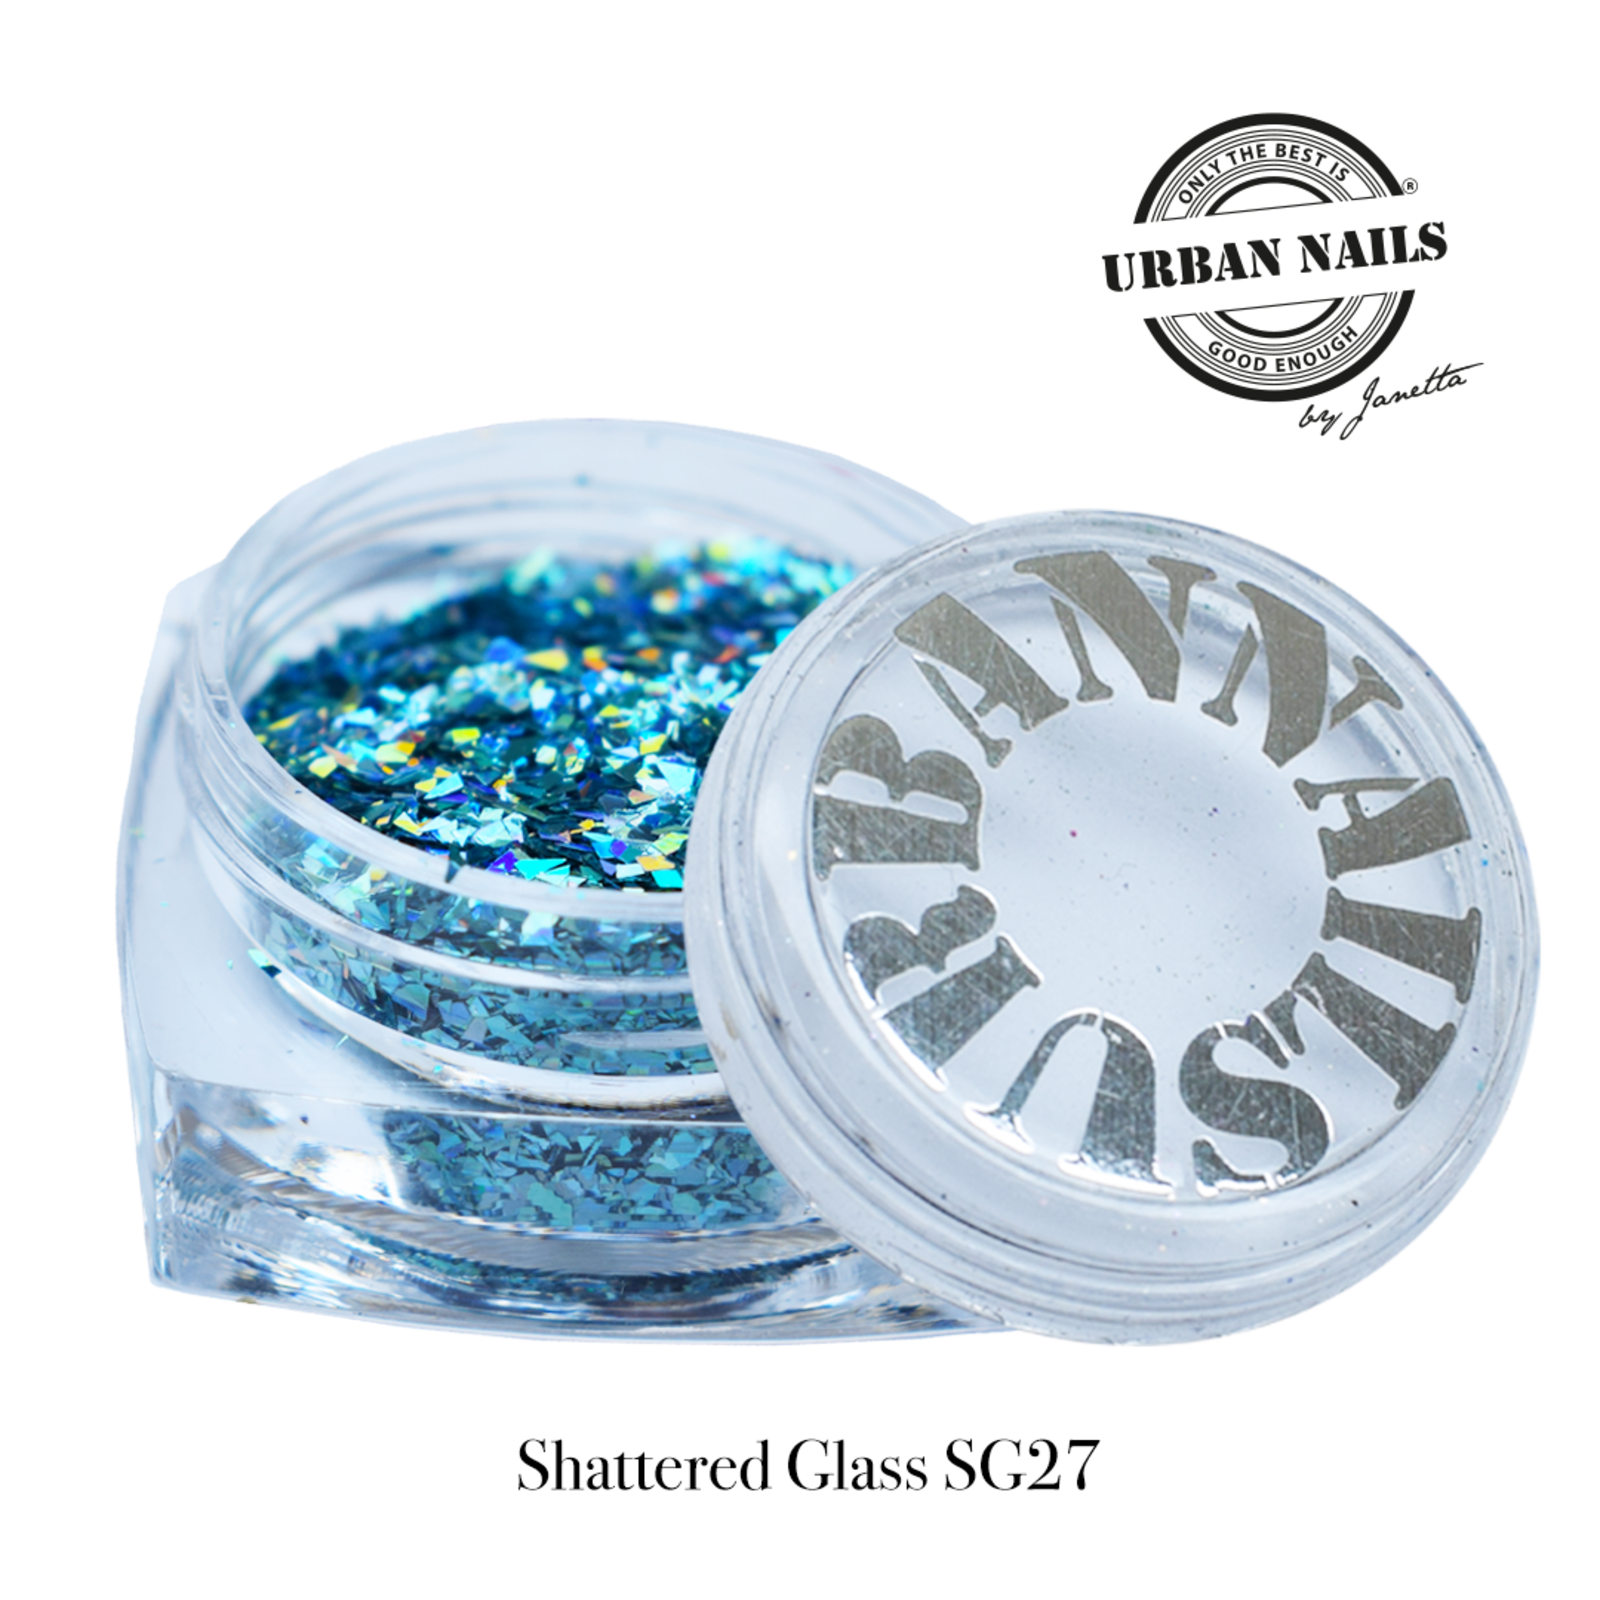 Urban nails Shattered Glass SG27 hologram lichtblauw